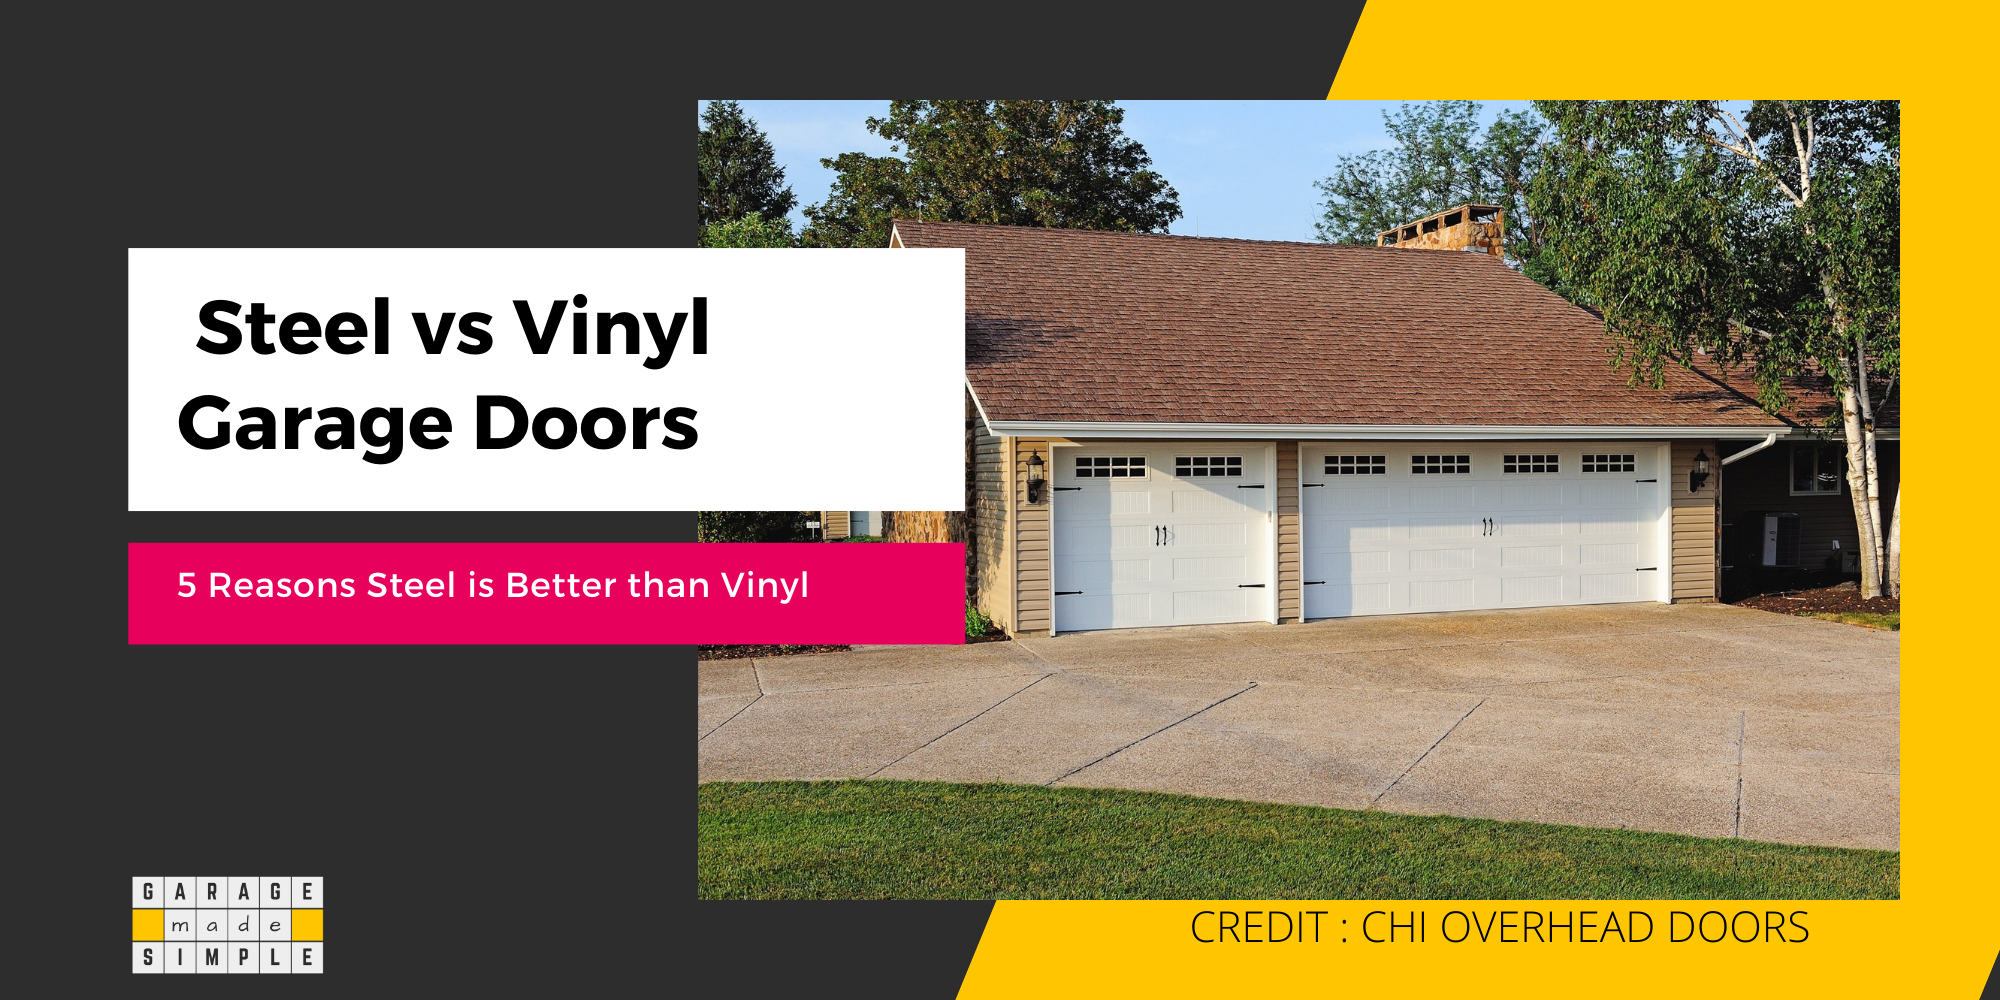 Steel Vs Vinyl Garage Doors: 5 Reasons Why Steel Is Better!